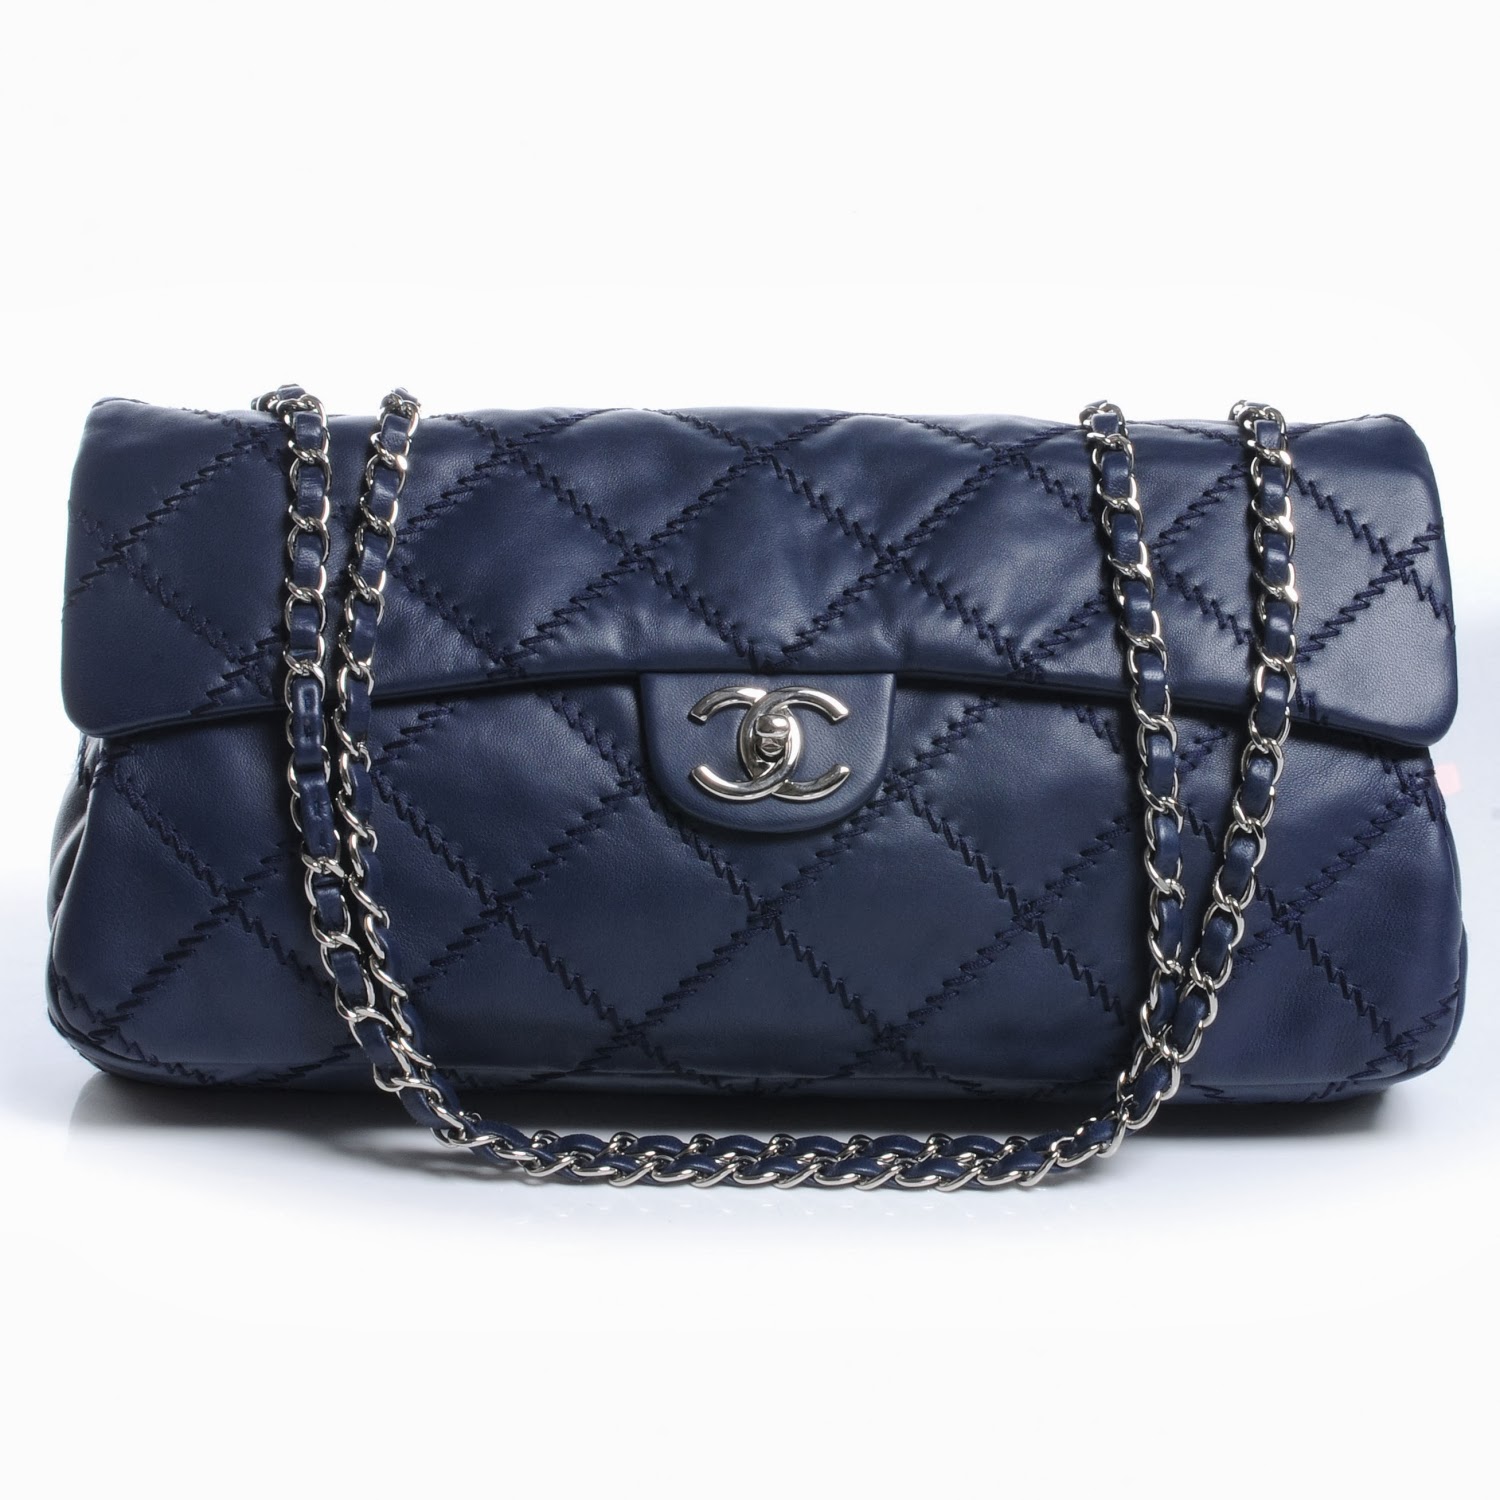 Vancouver Luxury Designer Consignment Shop: Buy Sell Consign Designer Handbags Chanel Louis ...